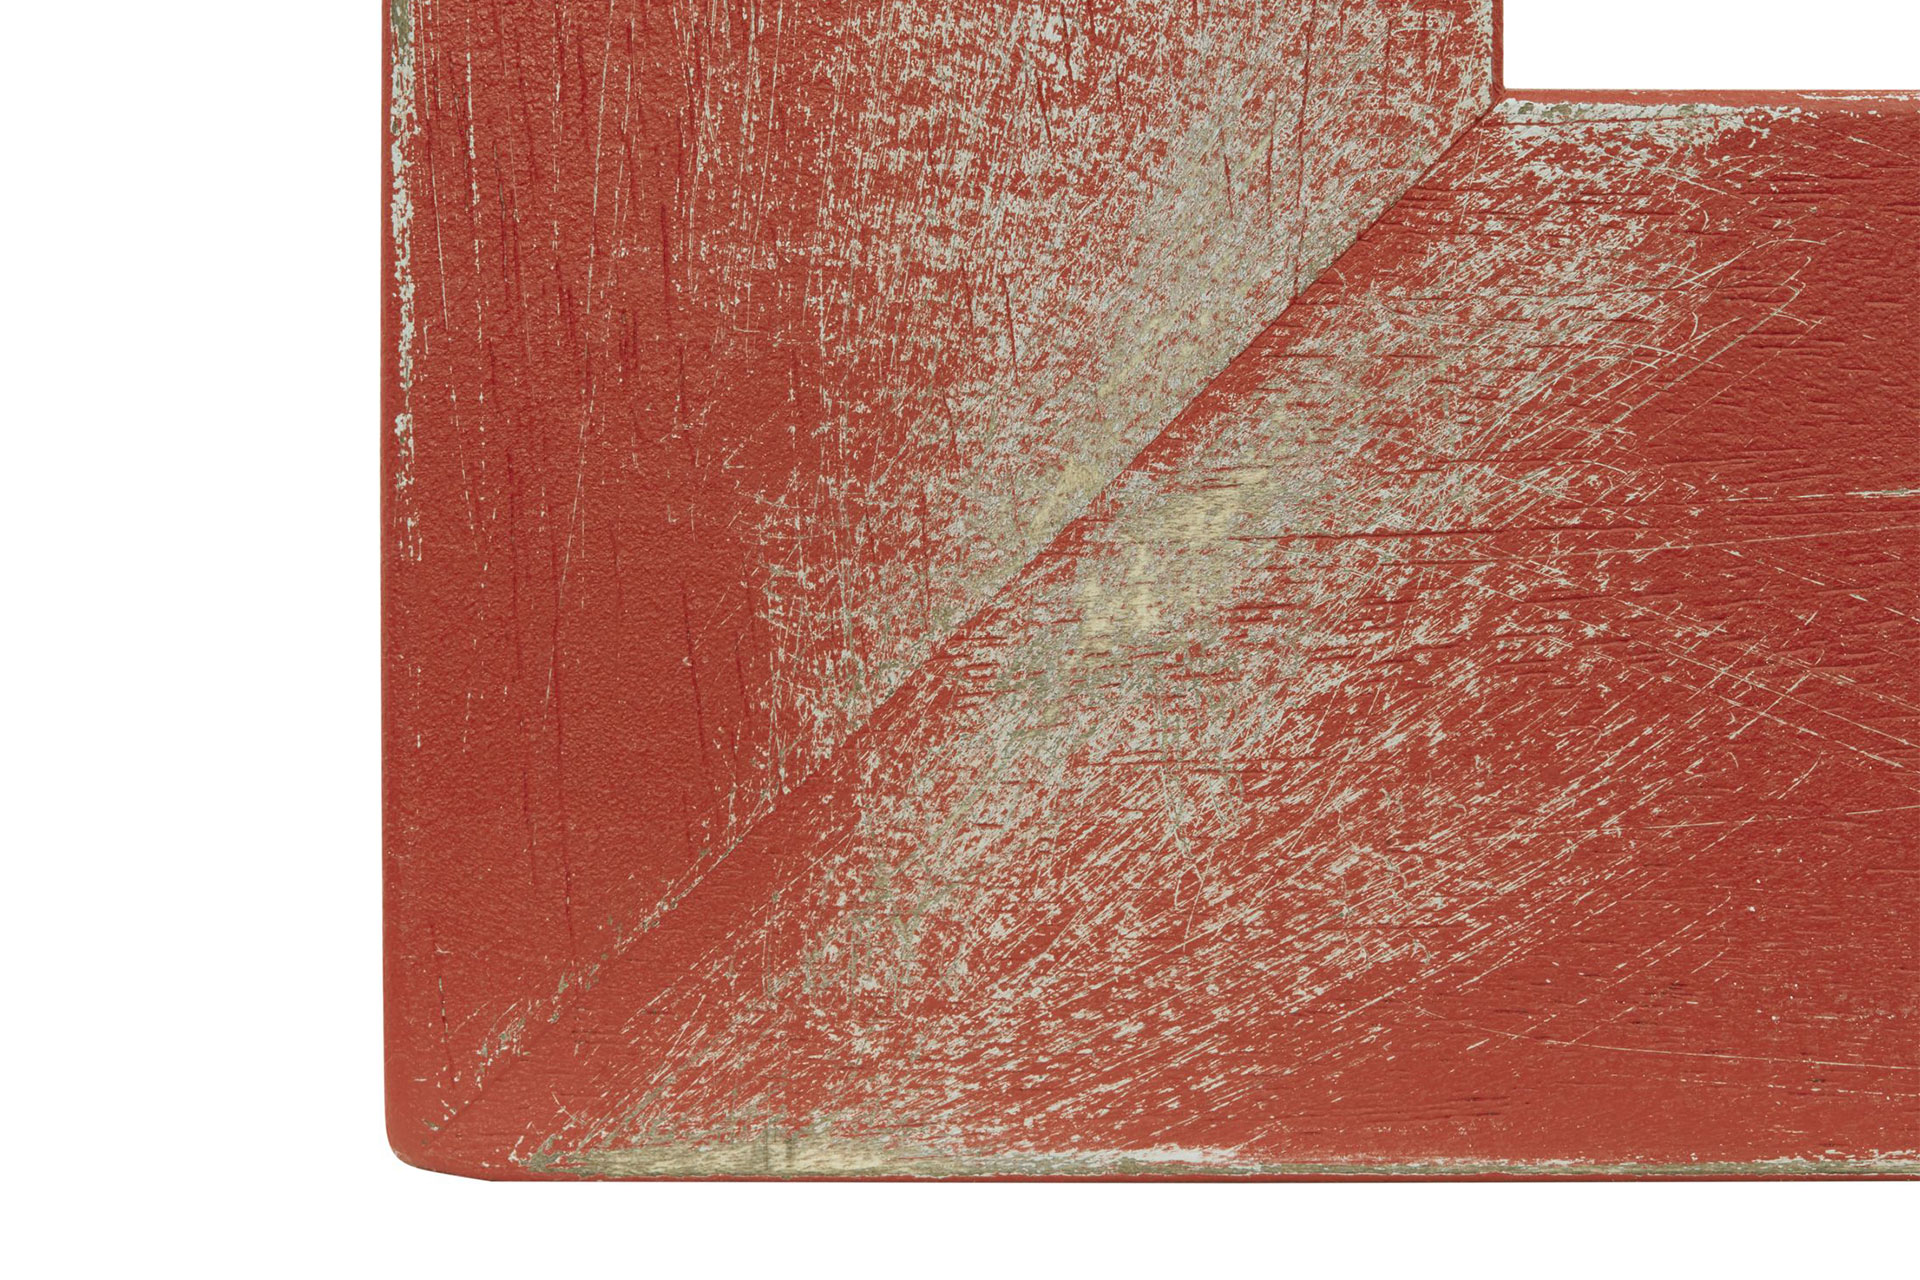 Wandspiegel Modell Flynn, Feuerrot, Gold/Weiß, Form: rechteckig Herstellung: by ASR-Rahmendesign Material: Holz, Wandspiegel, Shabby-Chic, Ansicht Ansicht Ecke